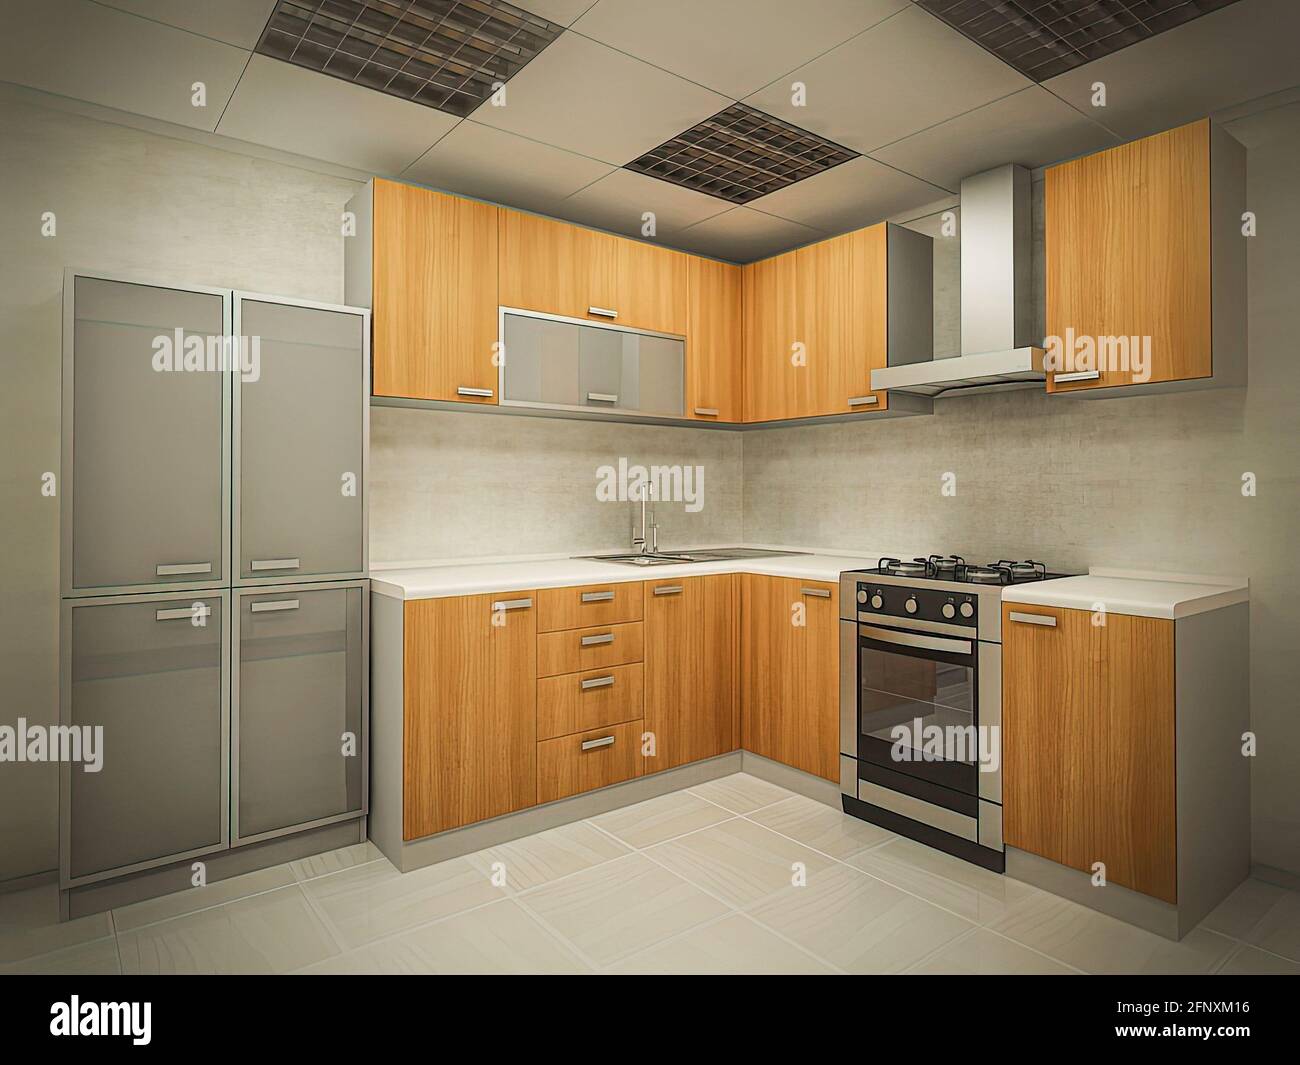 3d illustration of modern kitchen design concept in traditional